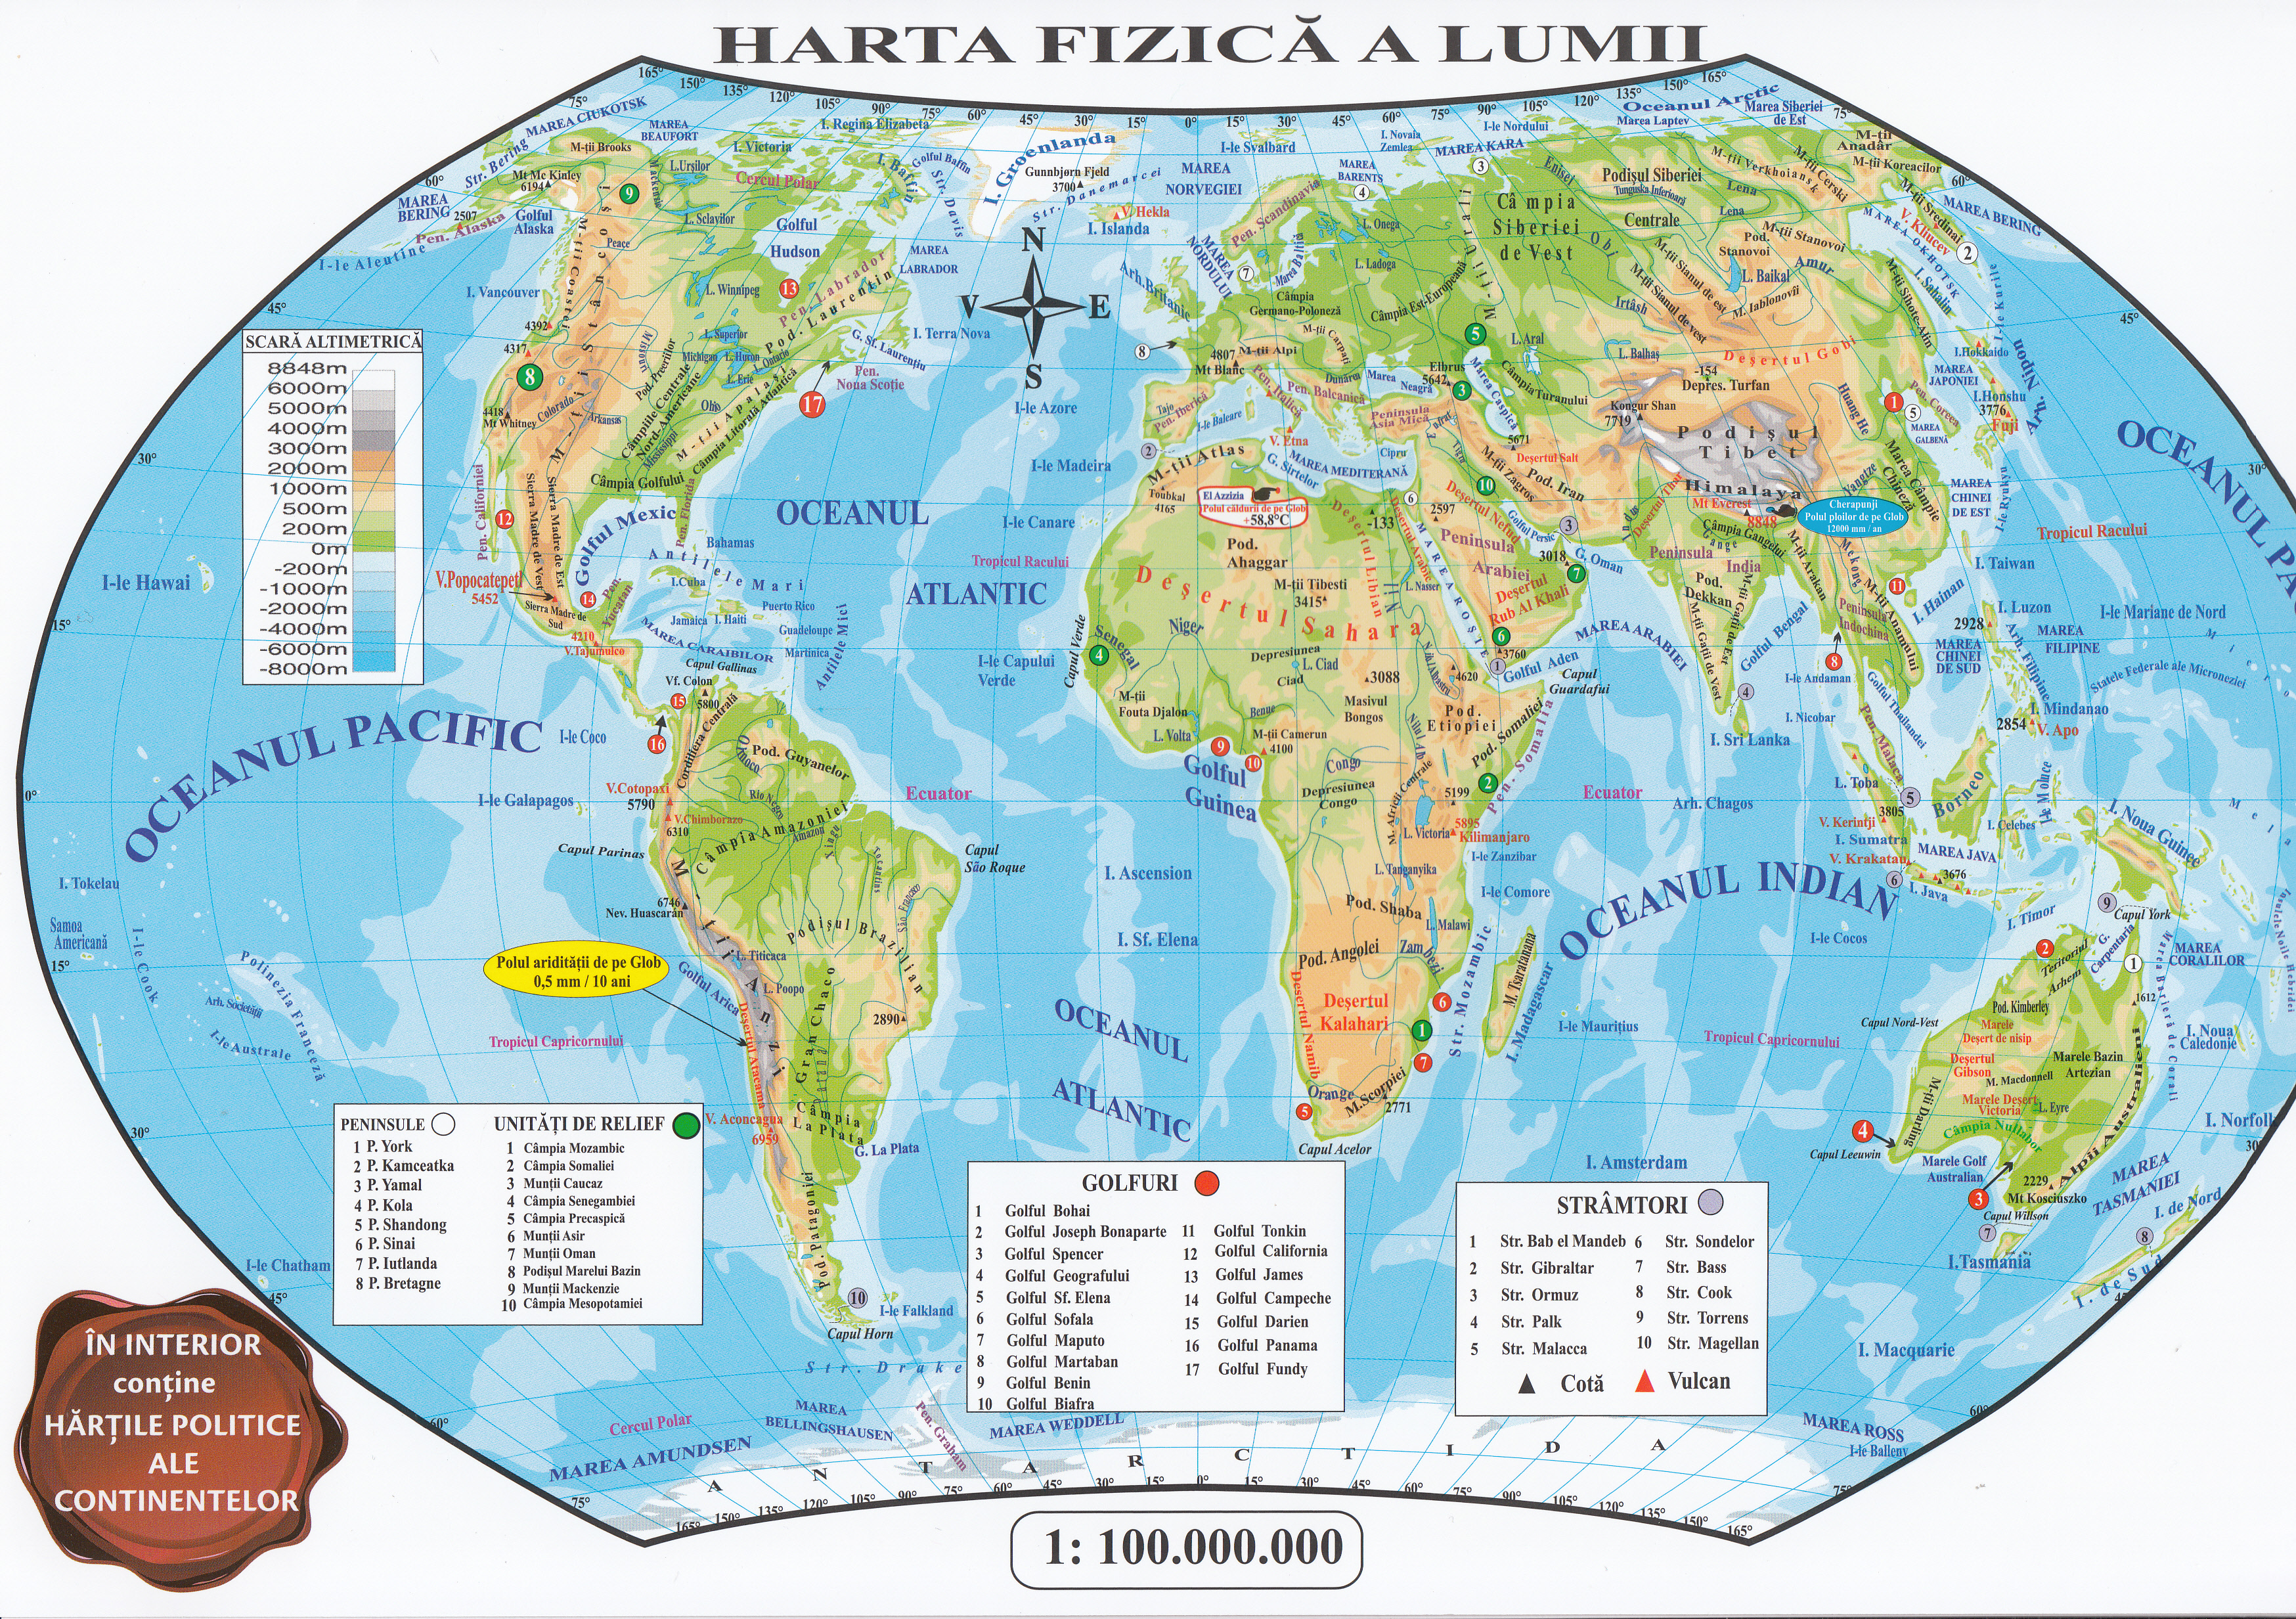 Harta politica a lumii + Harta fizica a lumii (pliata)